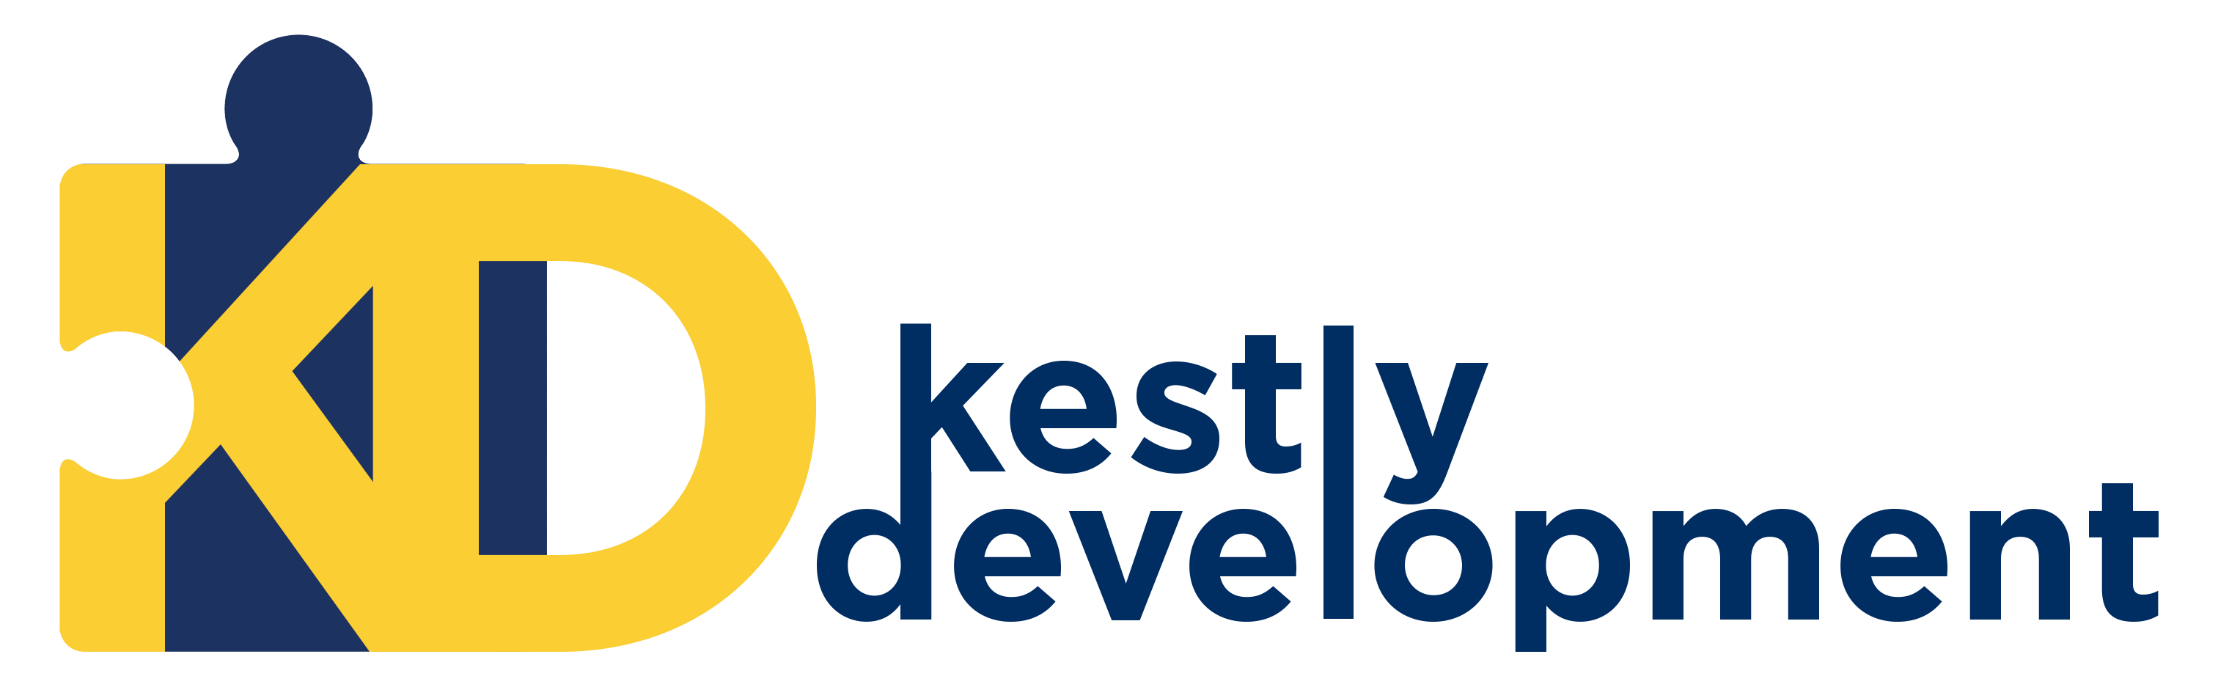 www.kestlydevelopment.com